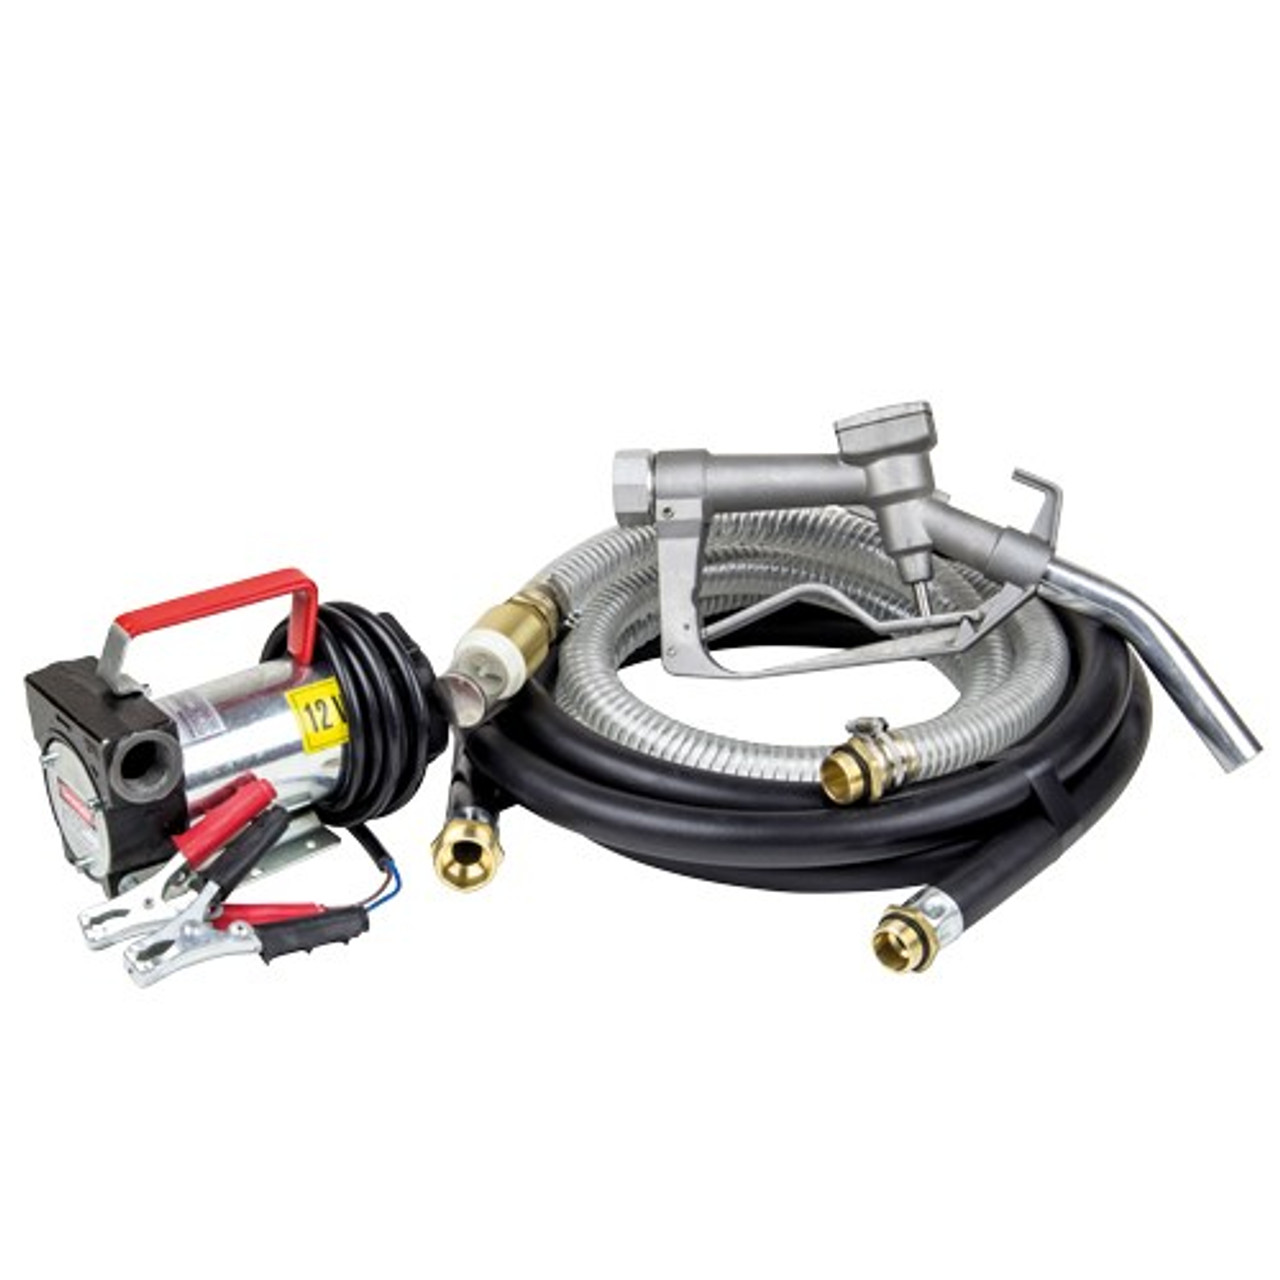 SIP 12v Diesel Fuel Transfer Pump Kit - SIP Industrial Products